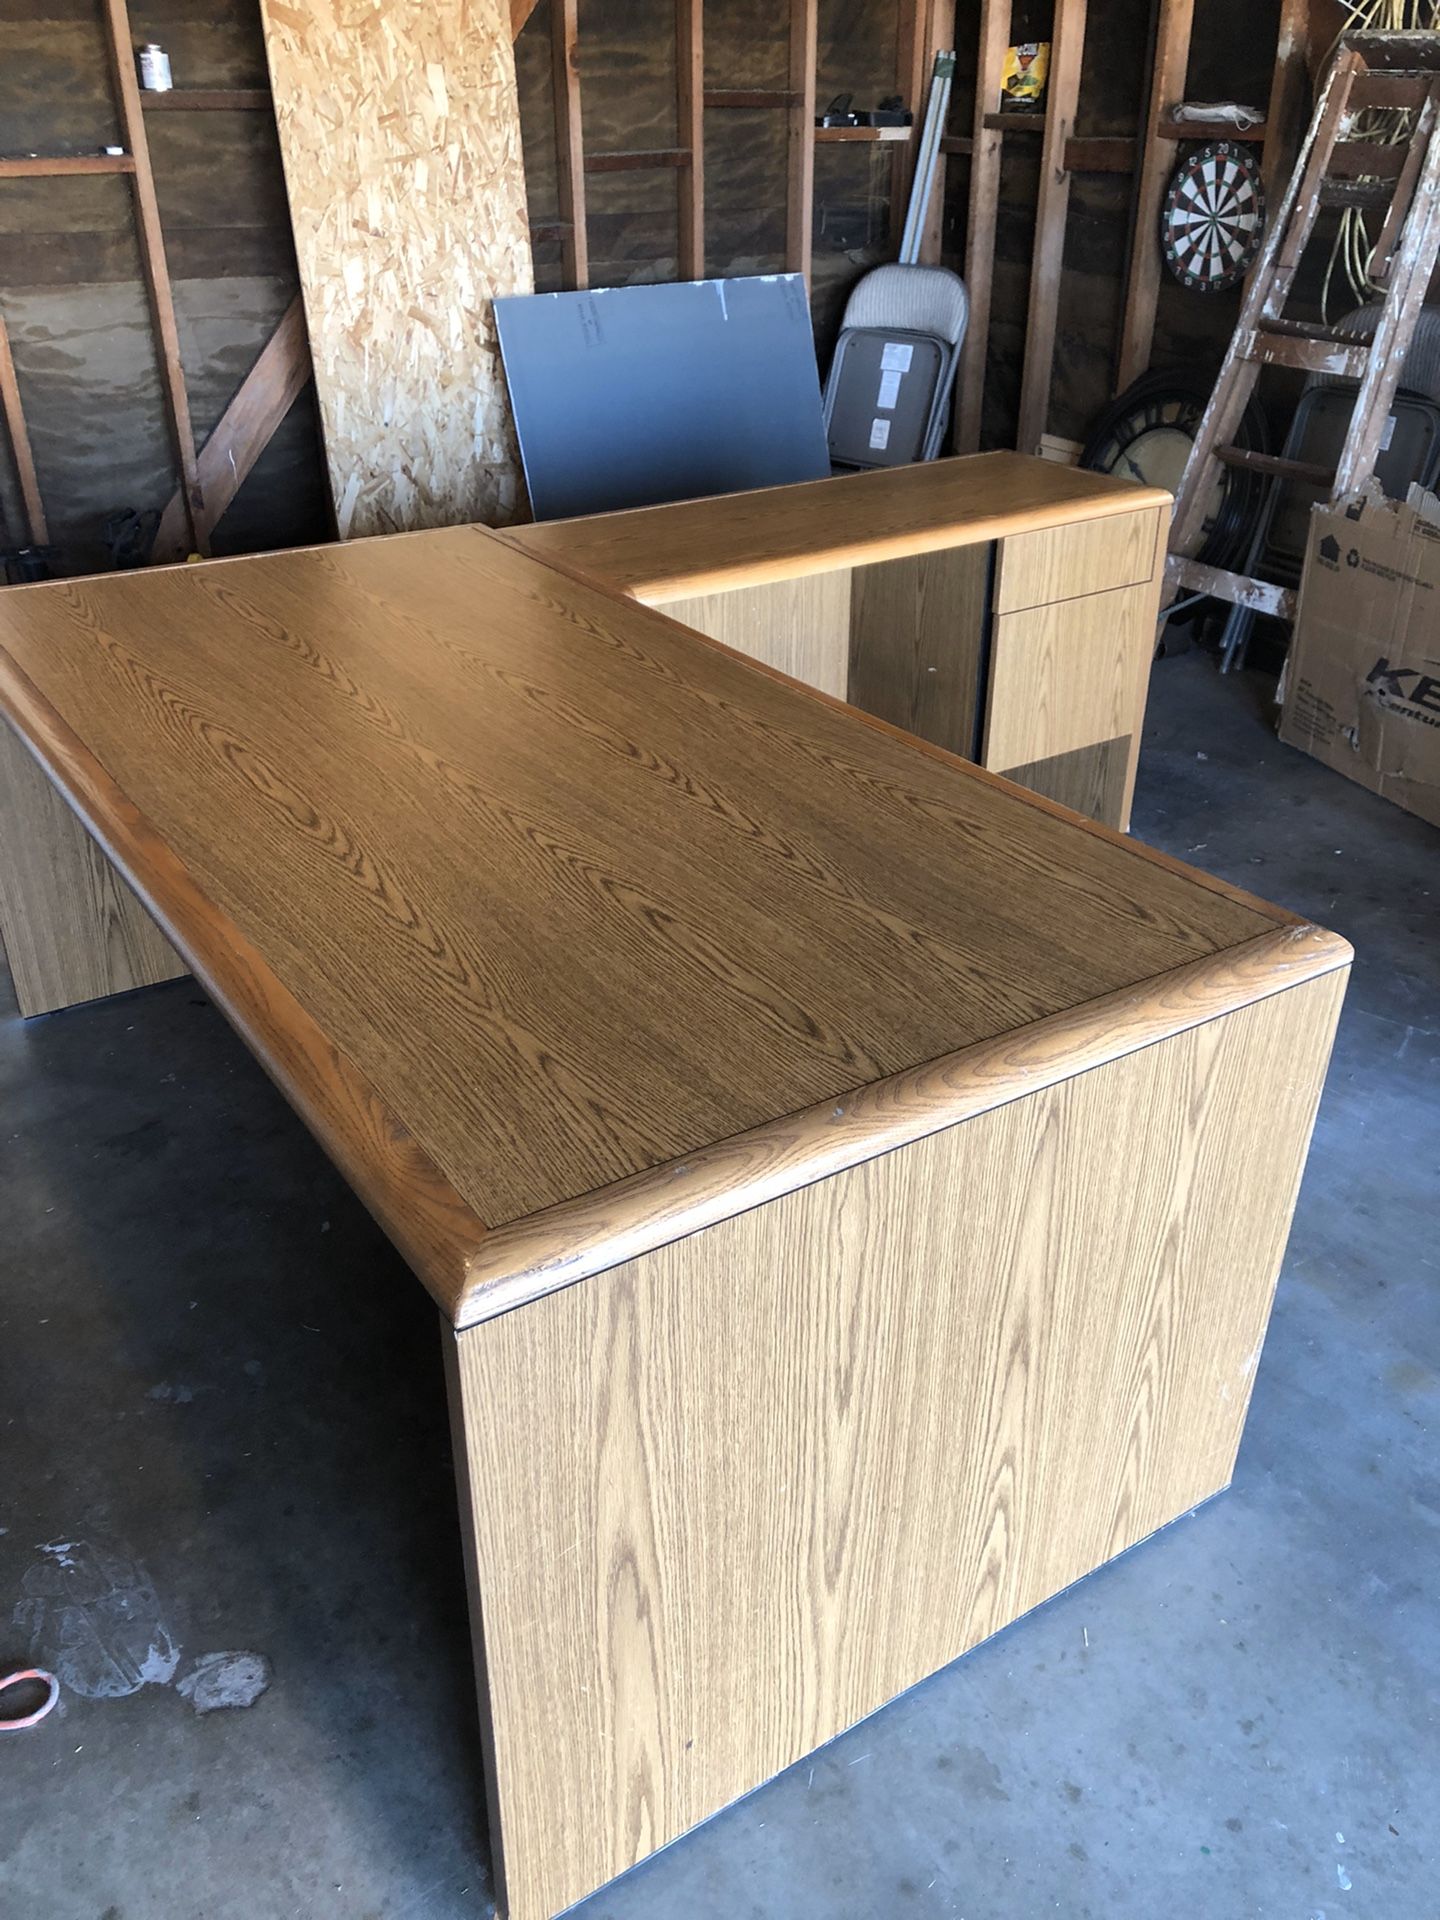 Free solid wood desk